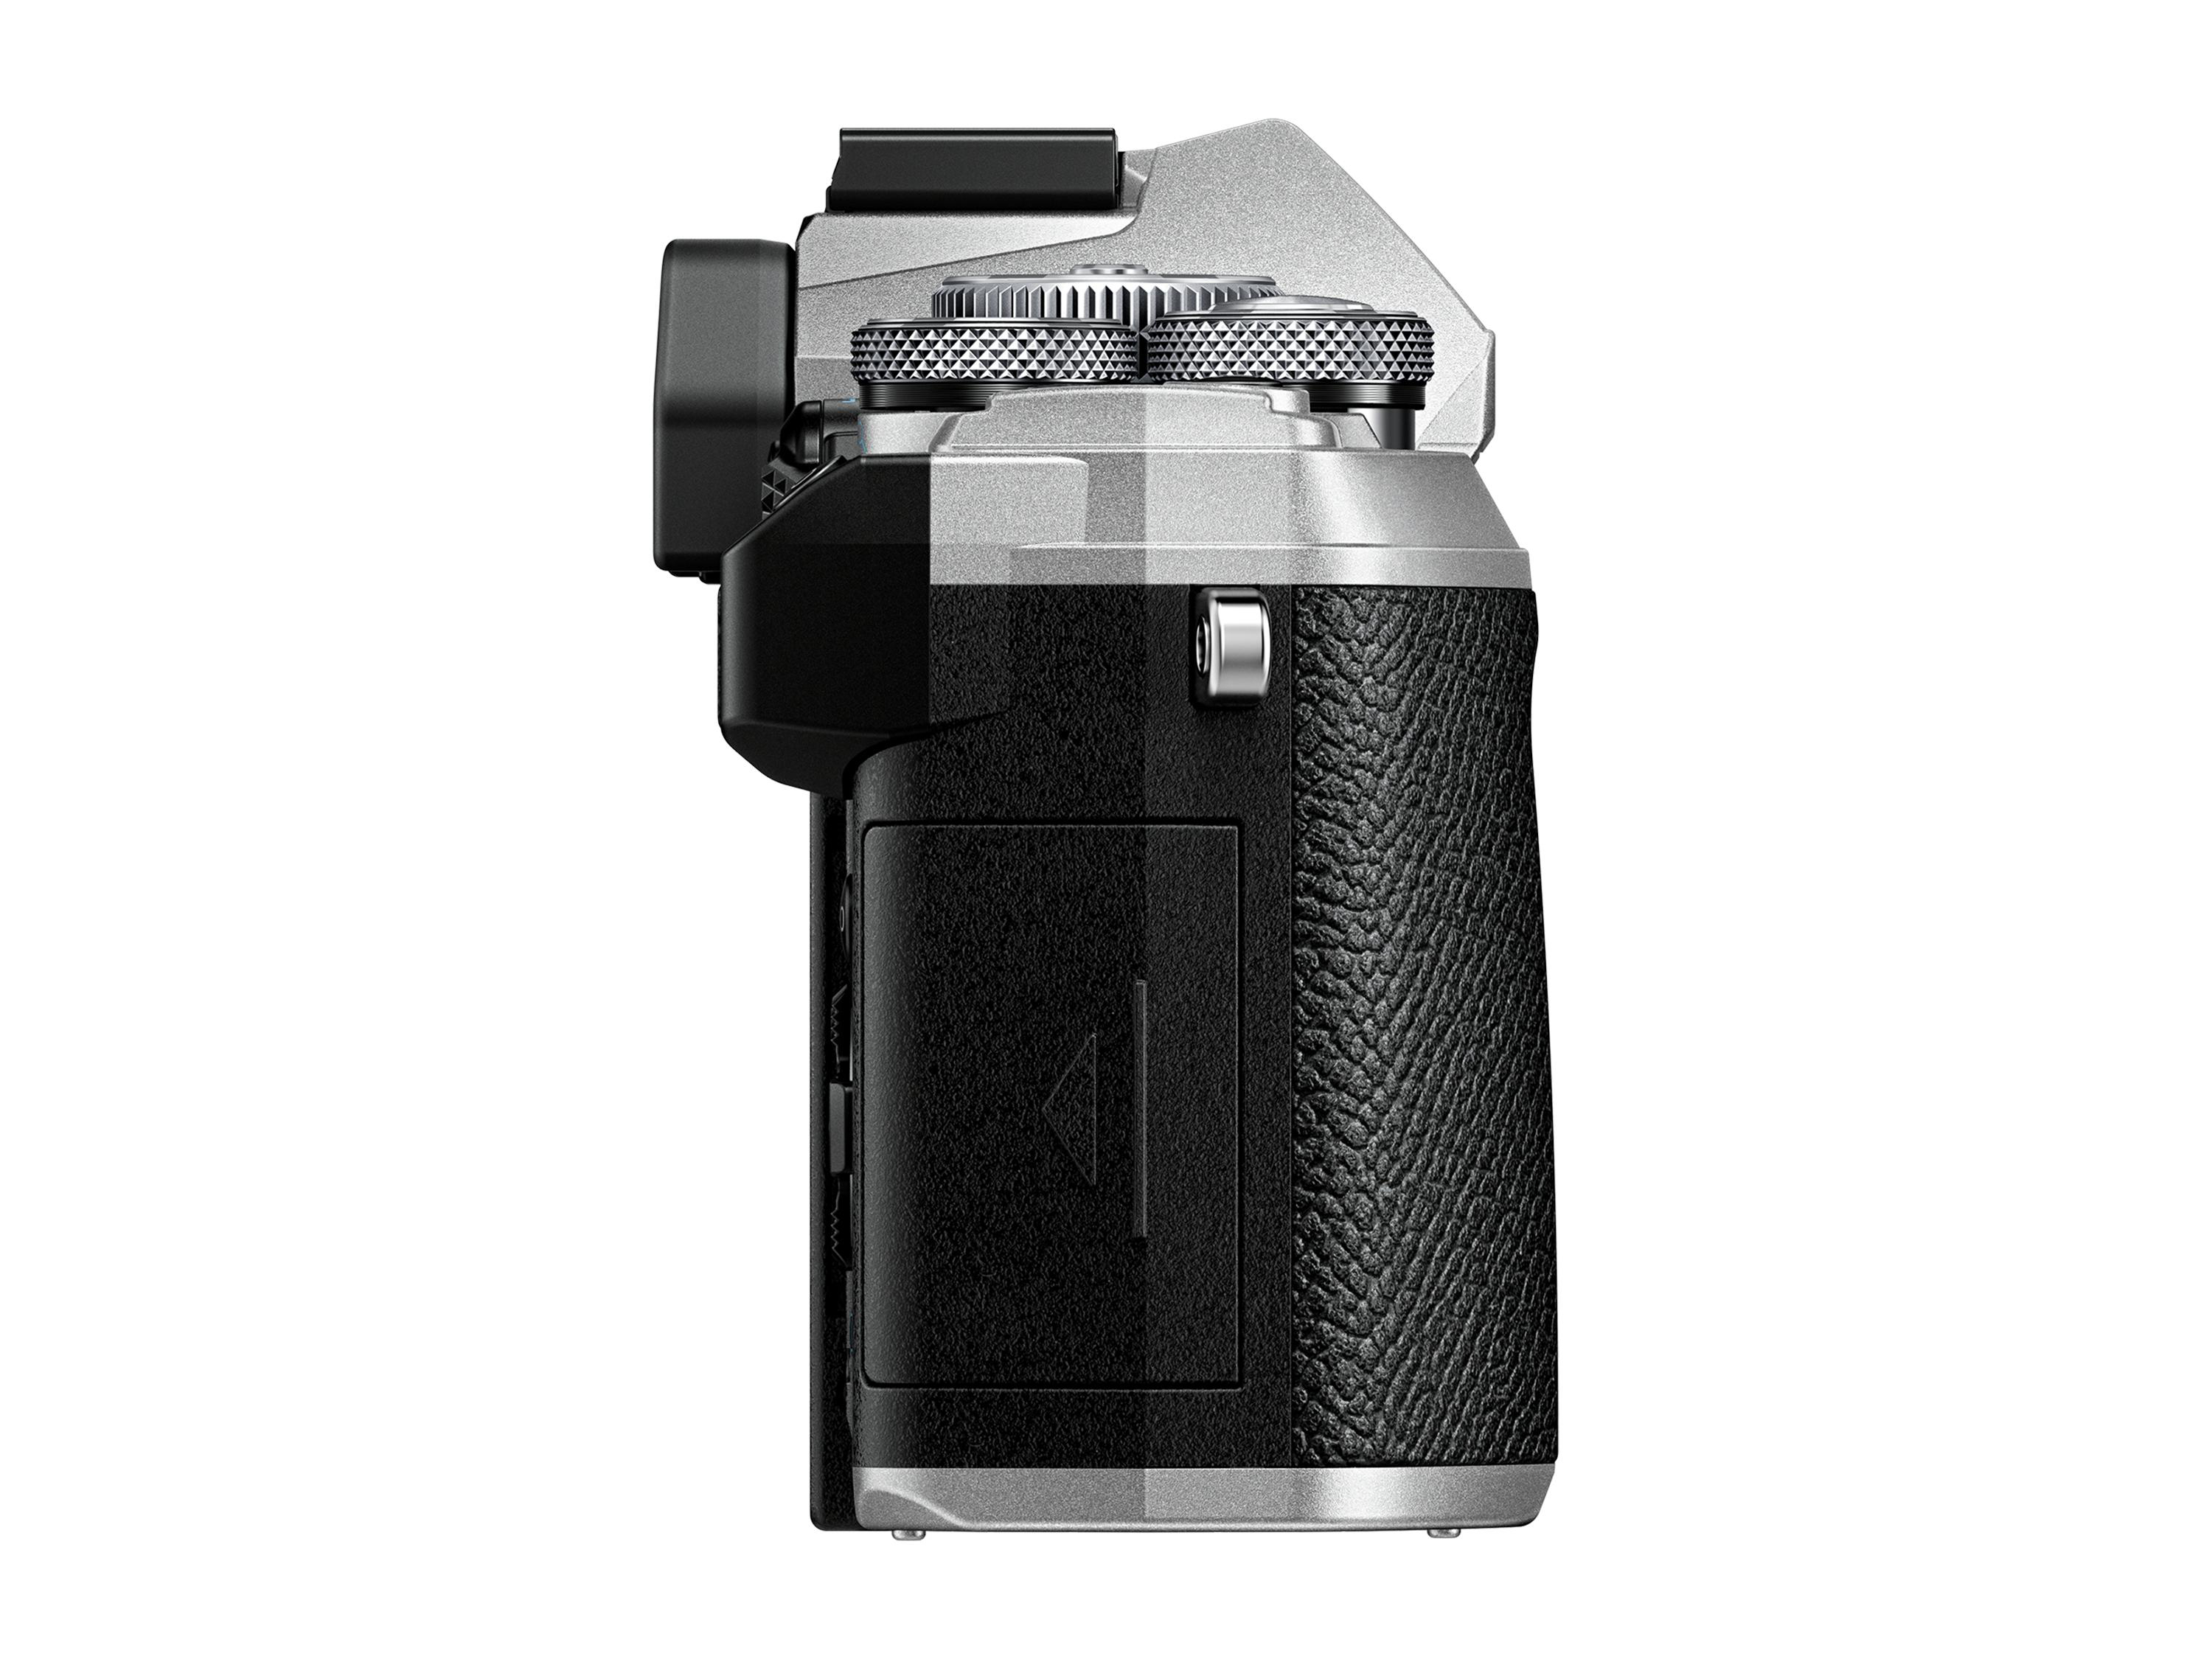 Display Kit SYSTEM OM 7,6 Objektiv 12-45 cm mit WLAN , mm Touchscreen, OM-5 Systemkamera